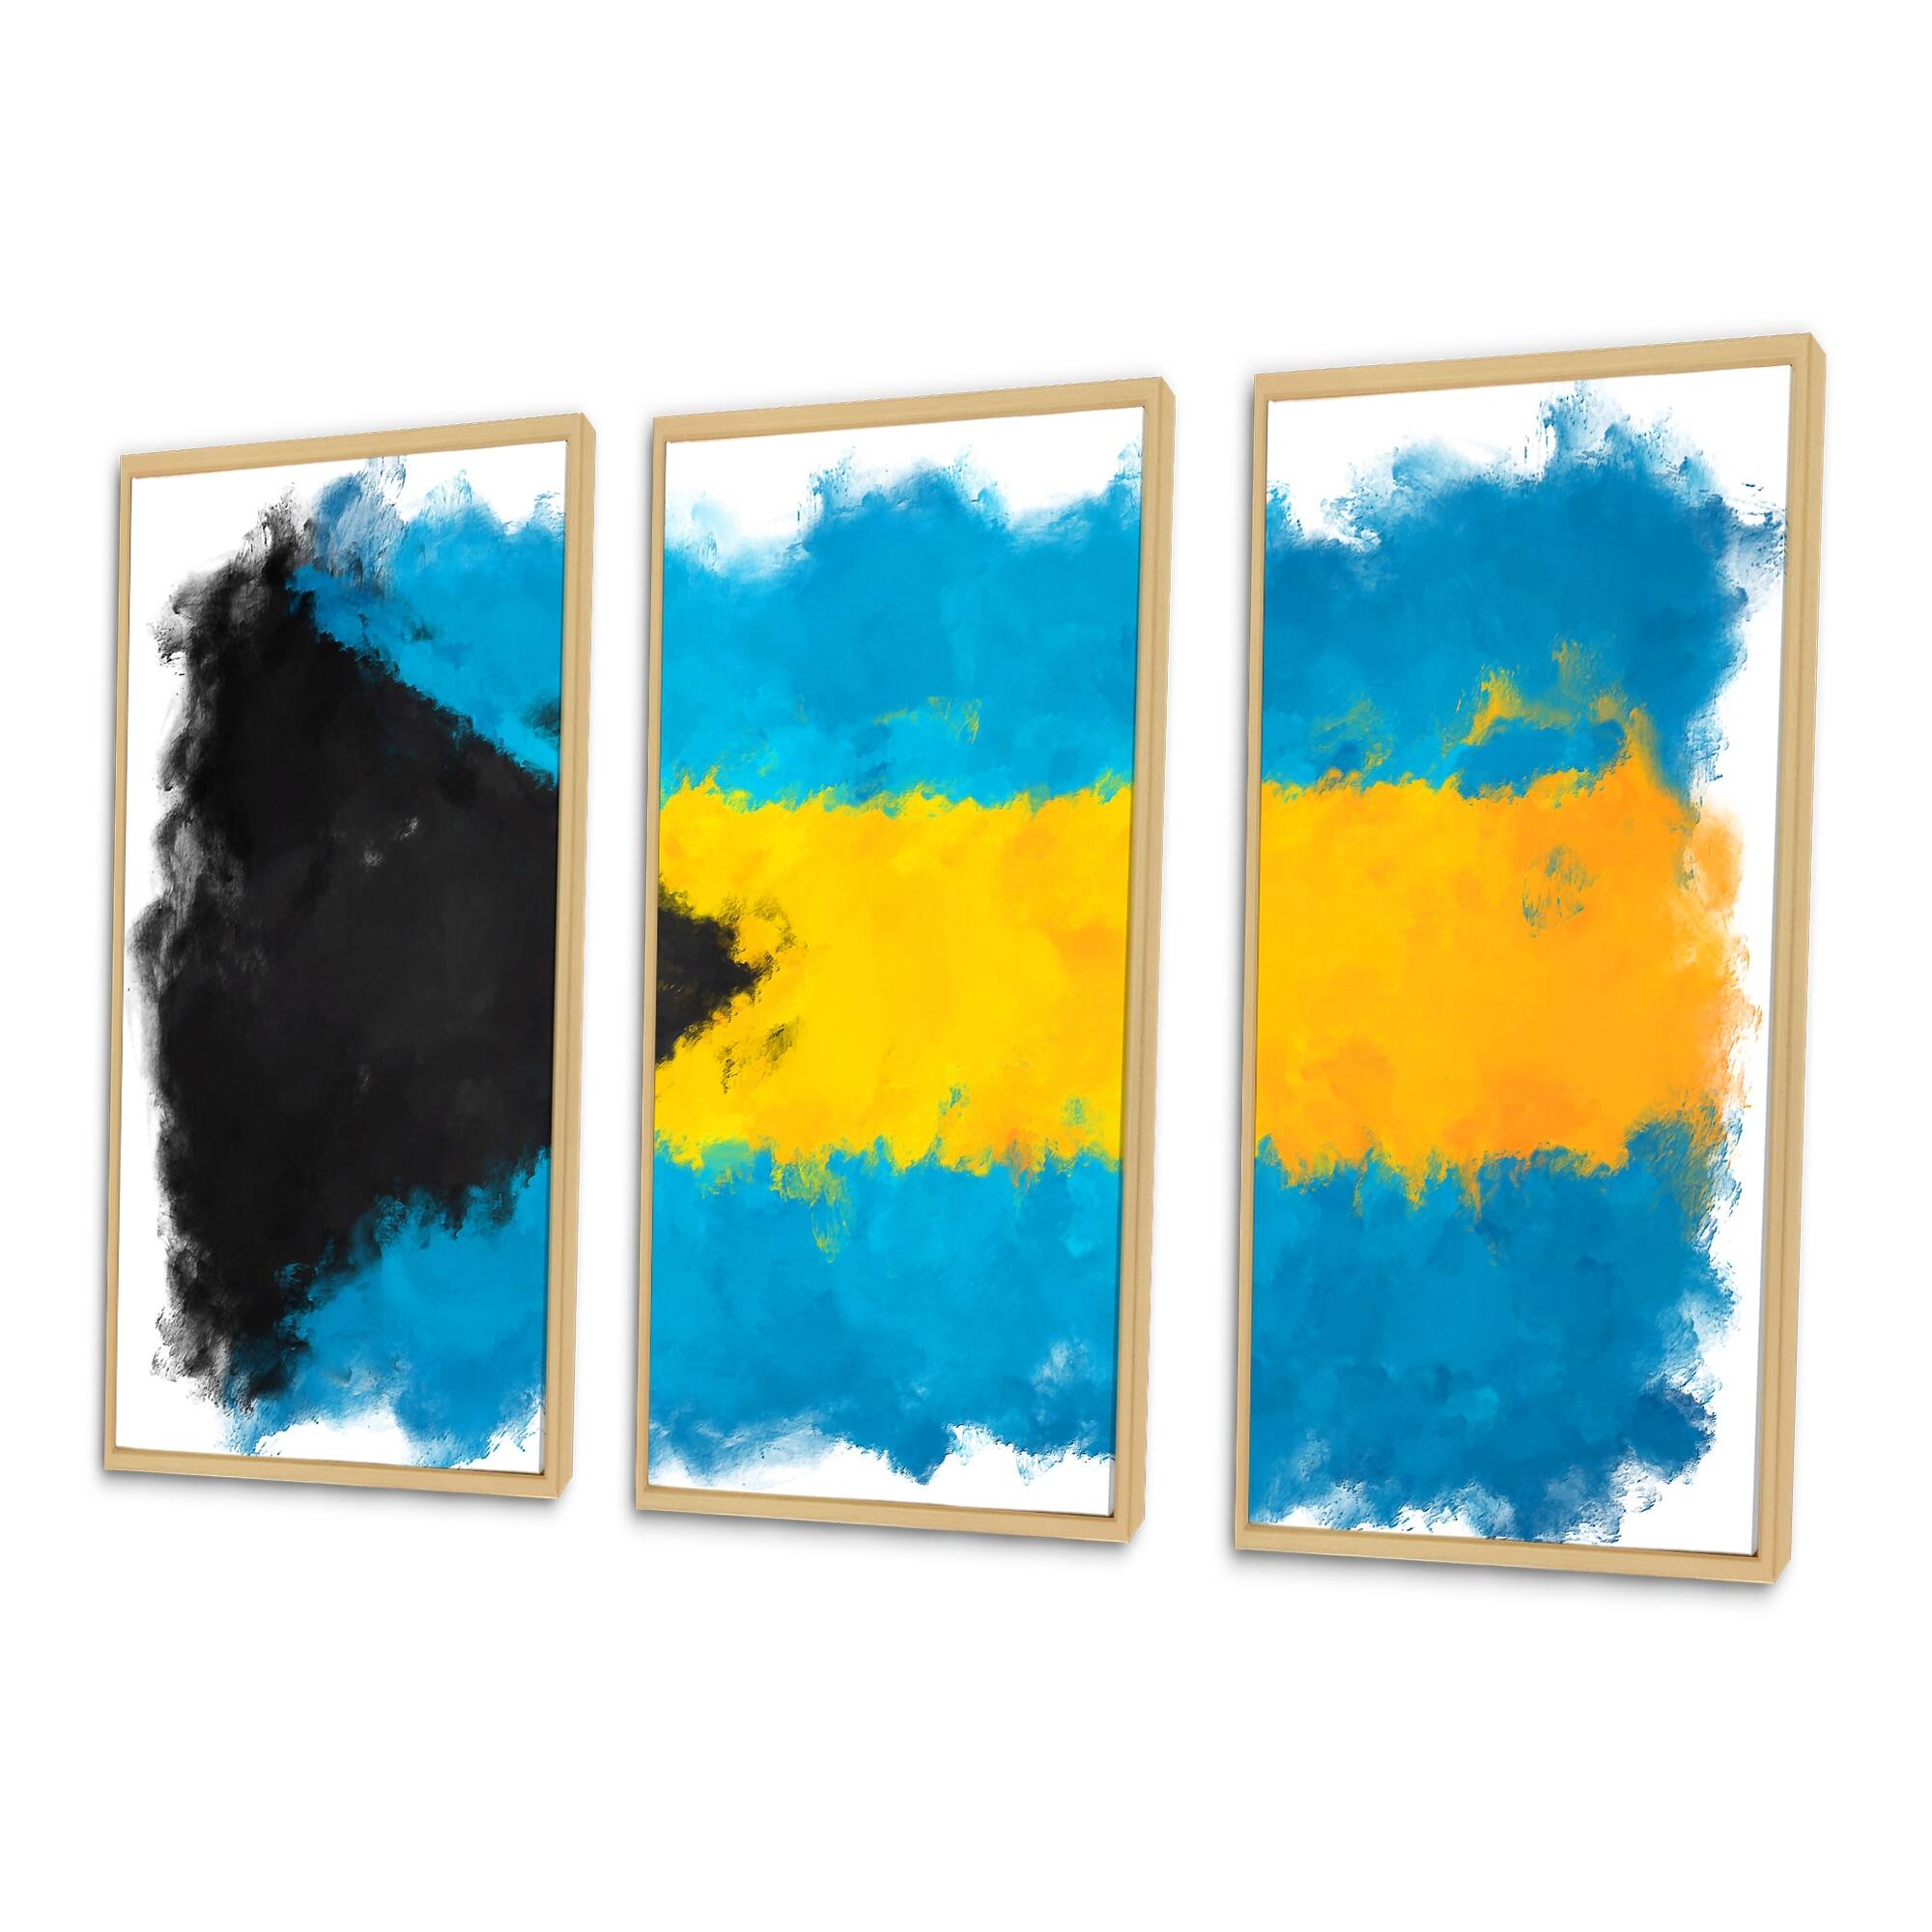 Designart "Bahamas Flag" Maps & Flags Framed Wall Art Set of 3 - 4 Colors of Frames